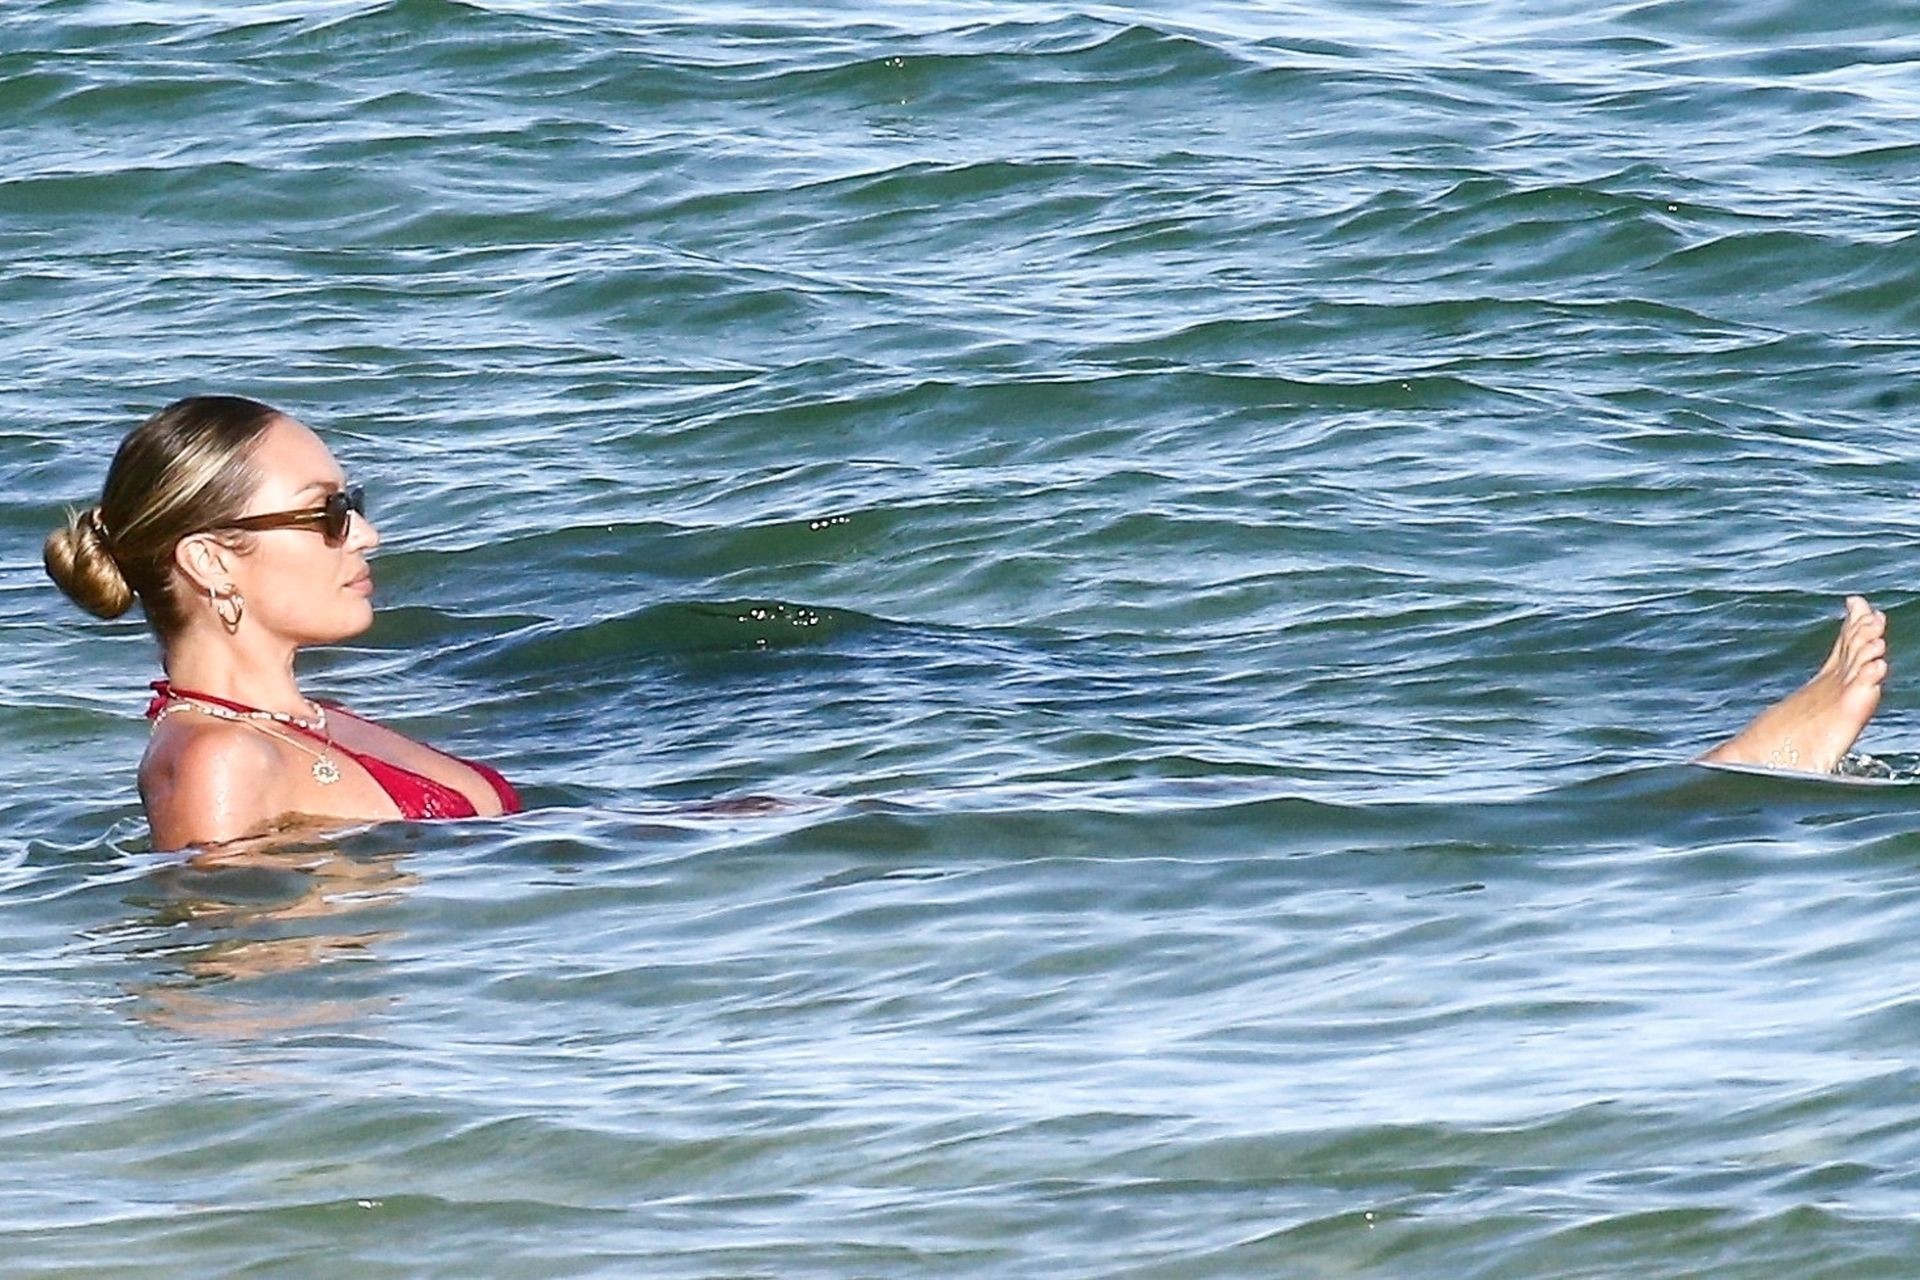 Candice Swanepoel Stuns in a Red Bikini on the Beach in Miami (53 Photos)